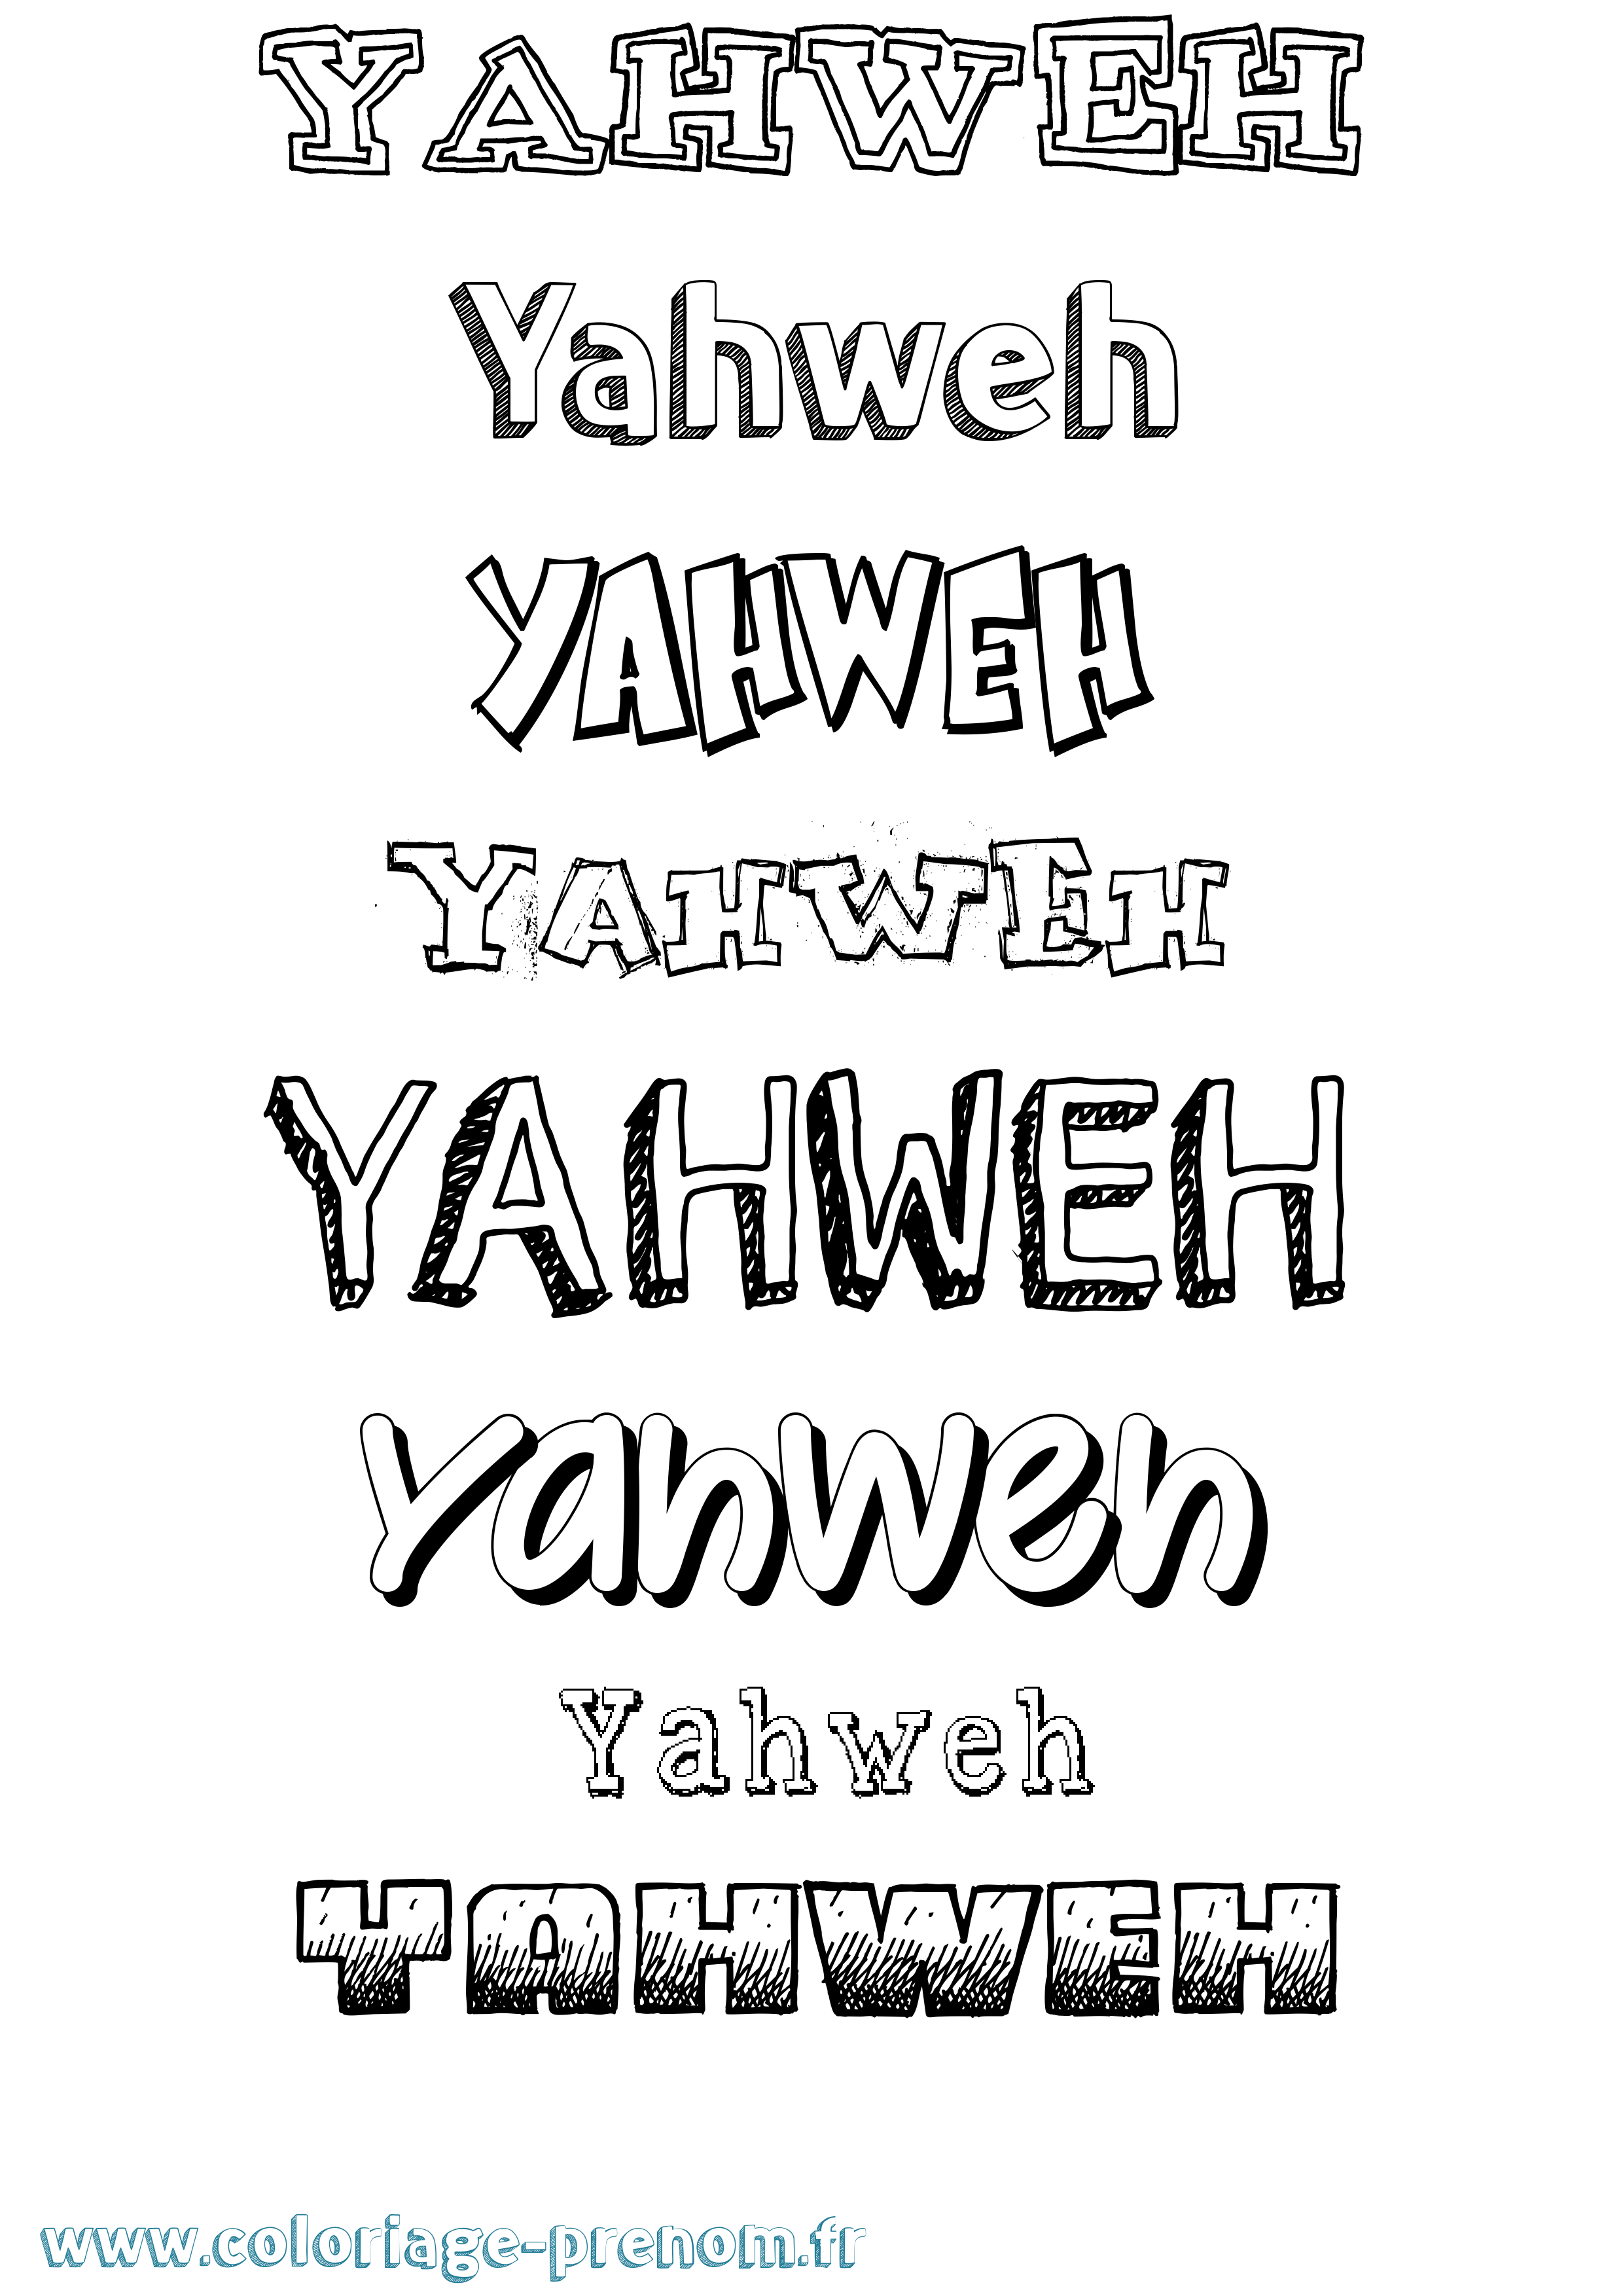 Coloriage prénom Yahweh Dessiné